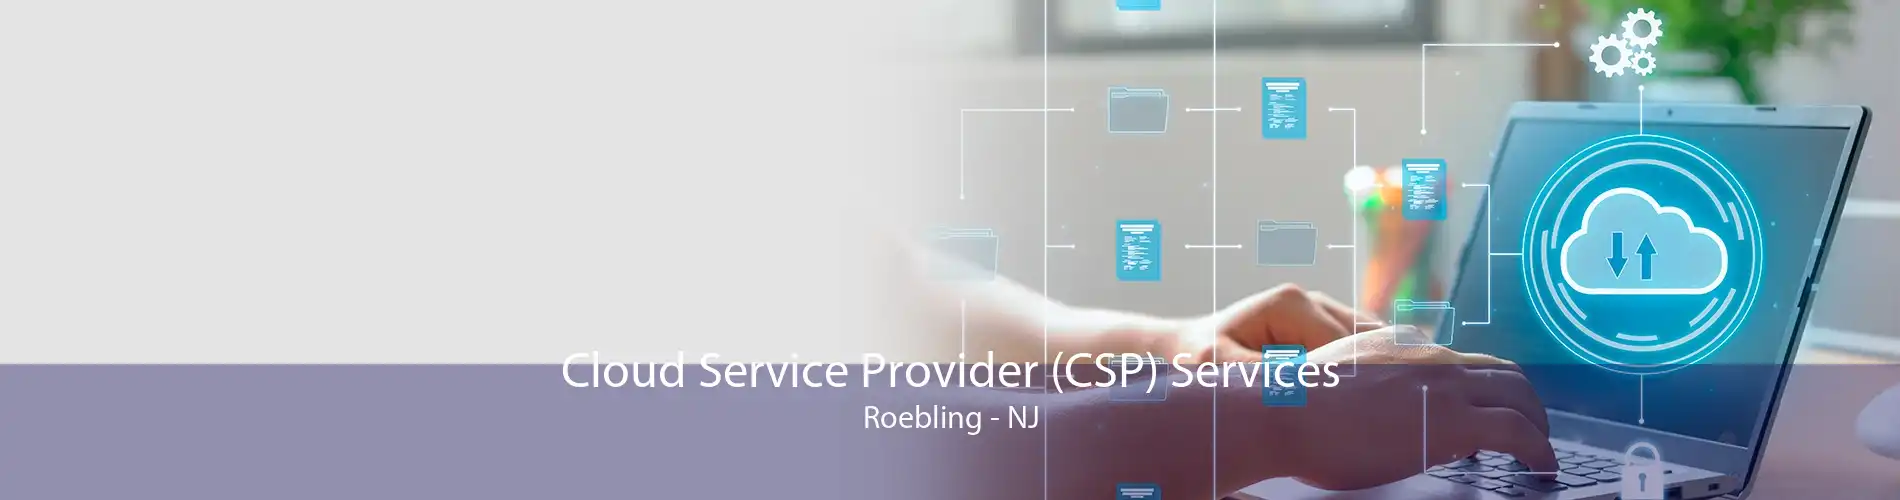 Cloud Service Provider (CSP) Services Roebling - NJ